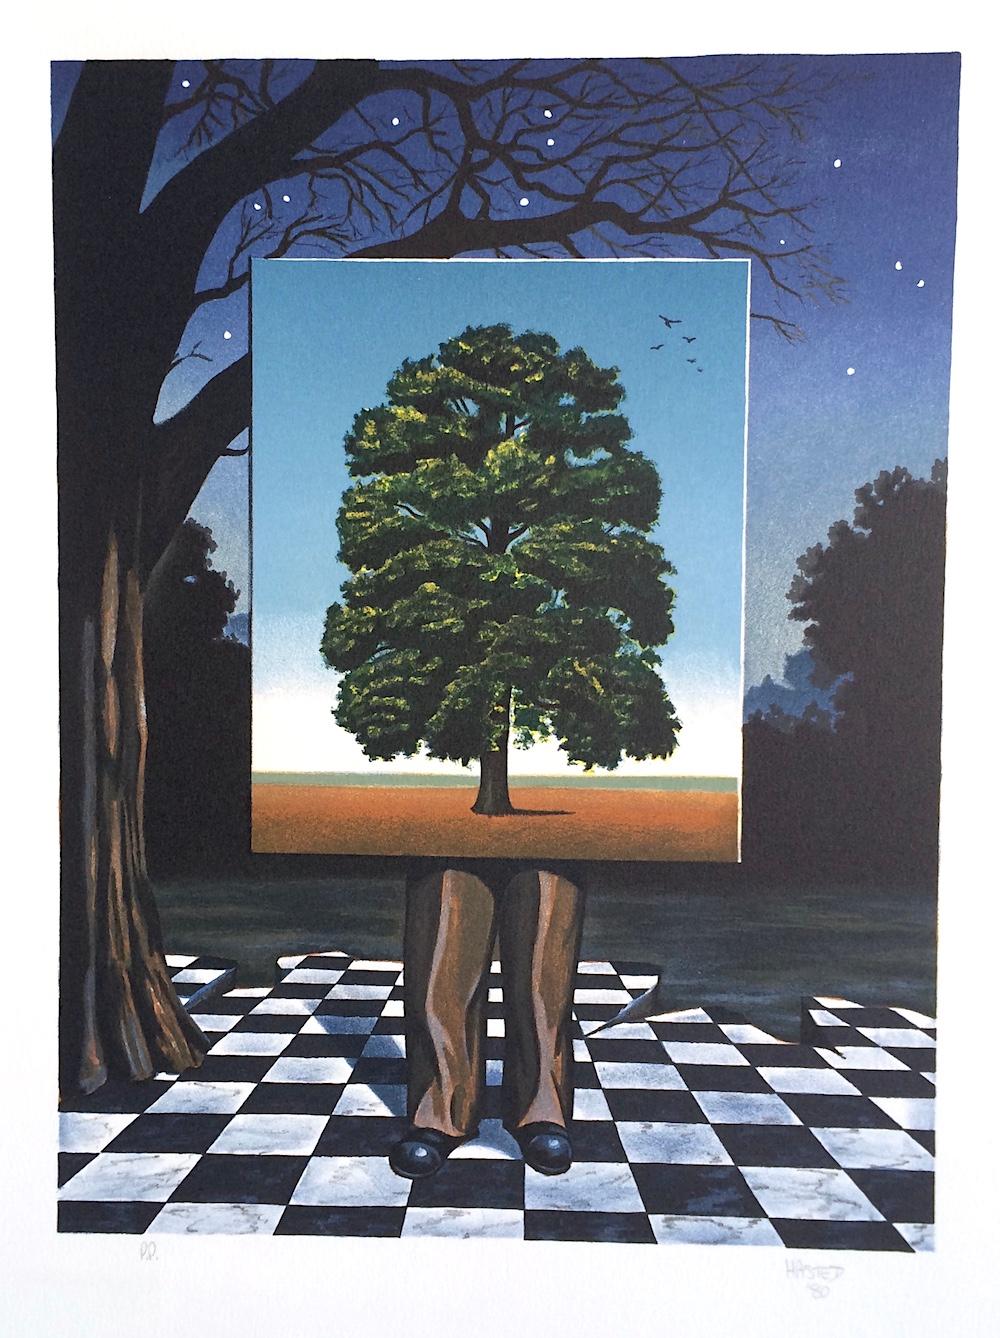  PUBLIC OUTCRY Signed Lithograph, Surrealist Scene Man, Tree, Checkered Tiles